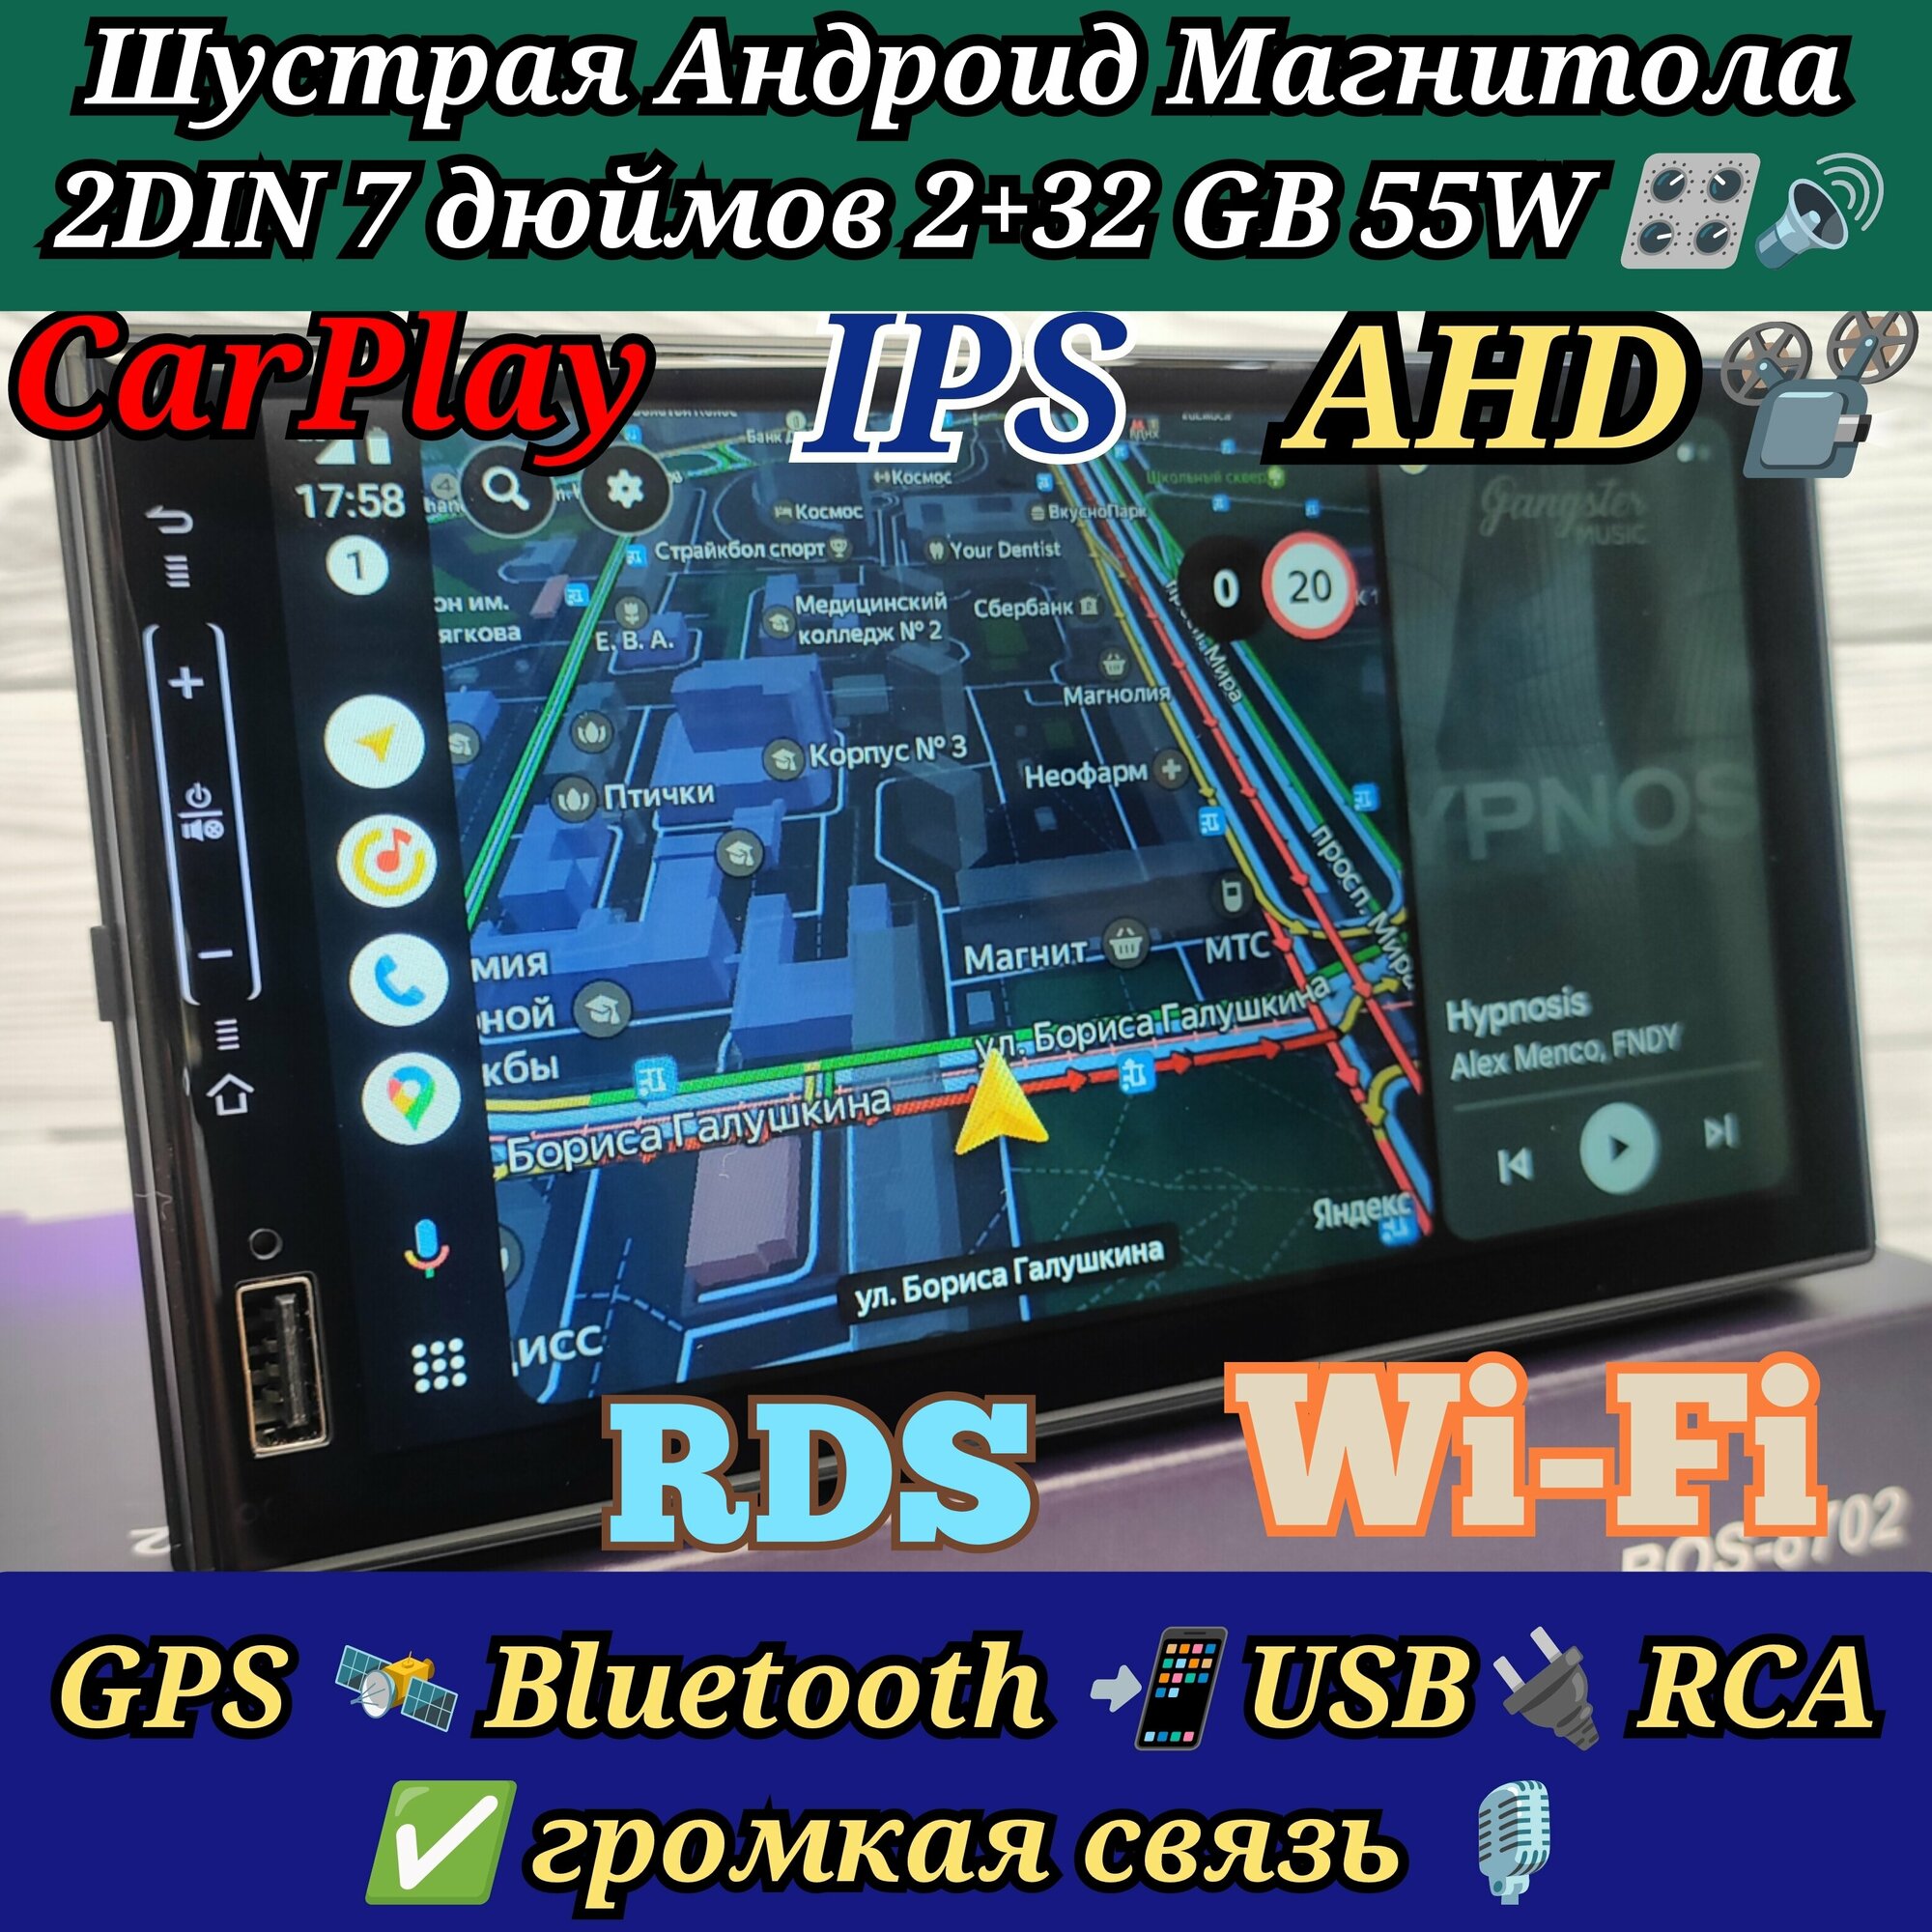 Автомагнитола 2DIN 7 дюймов 2+32 GB, Андройд 12, CarPlay, Android Auto, IPS, FM, Bluetooth, GPS, Wi-Fi, USB, MIC, RDS, BOS-MINI BOS-8702